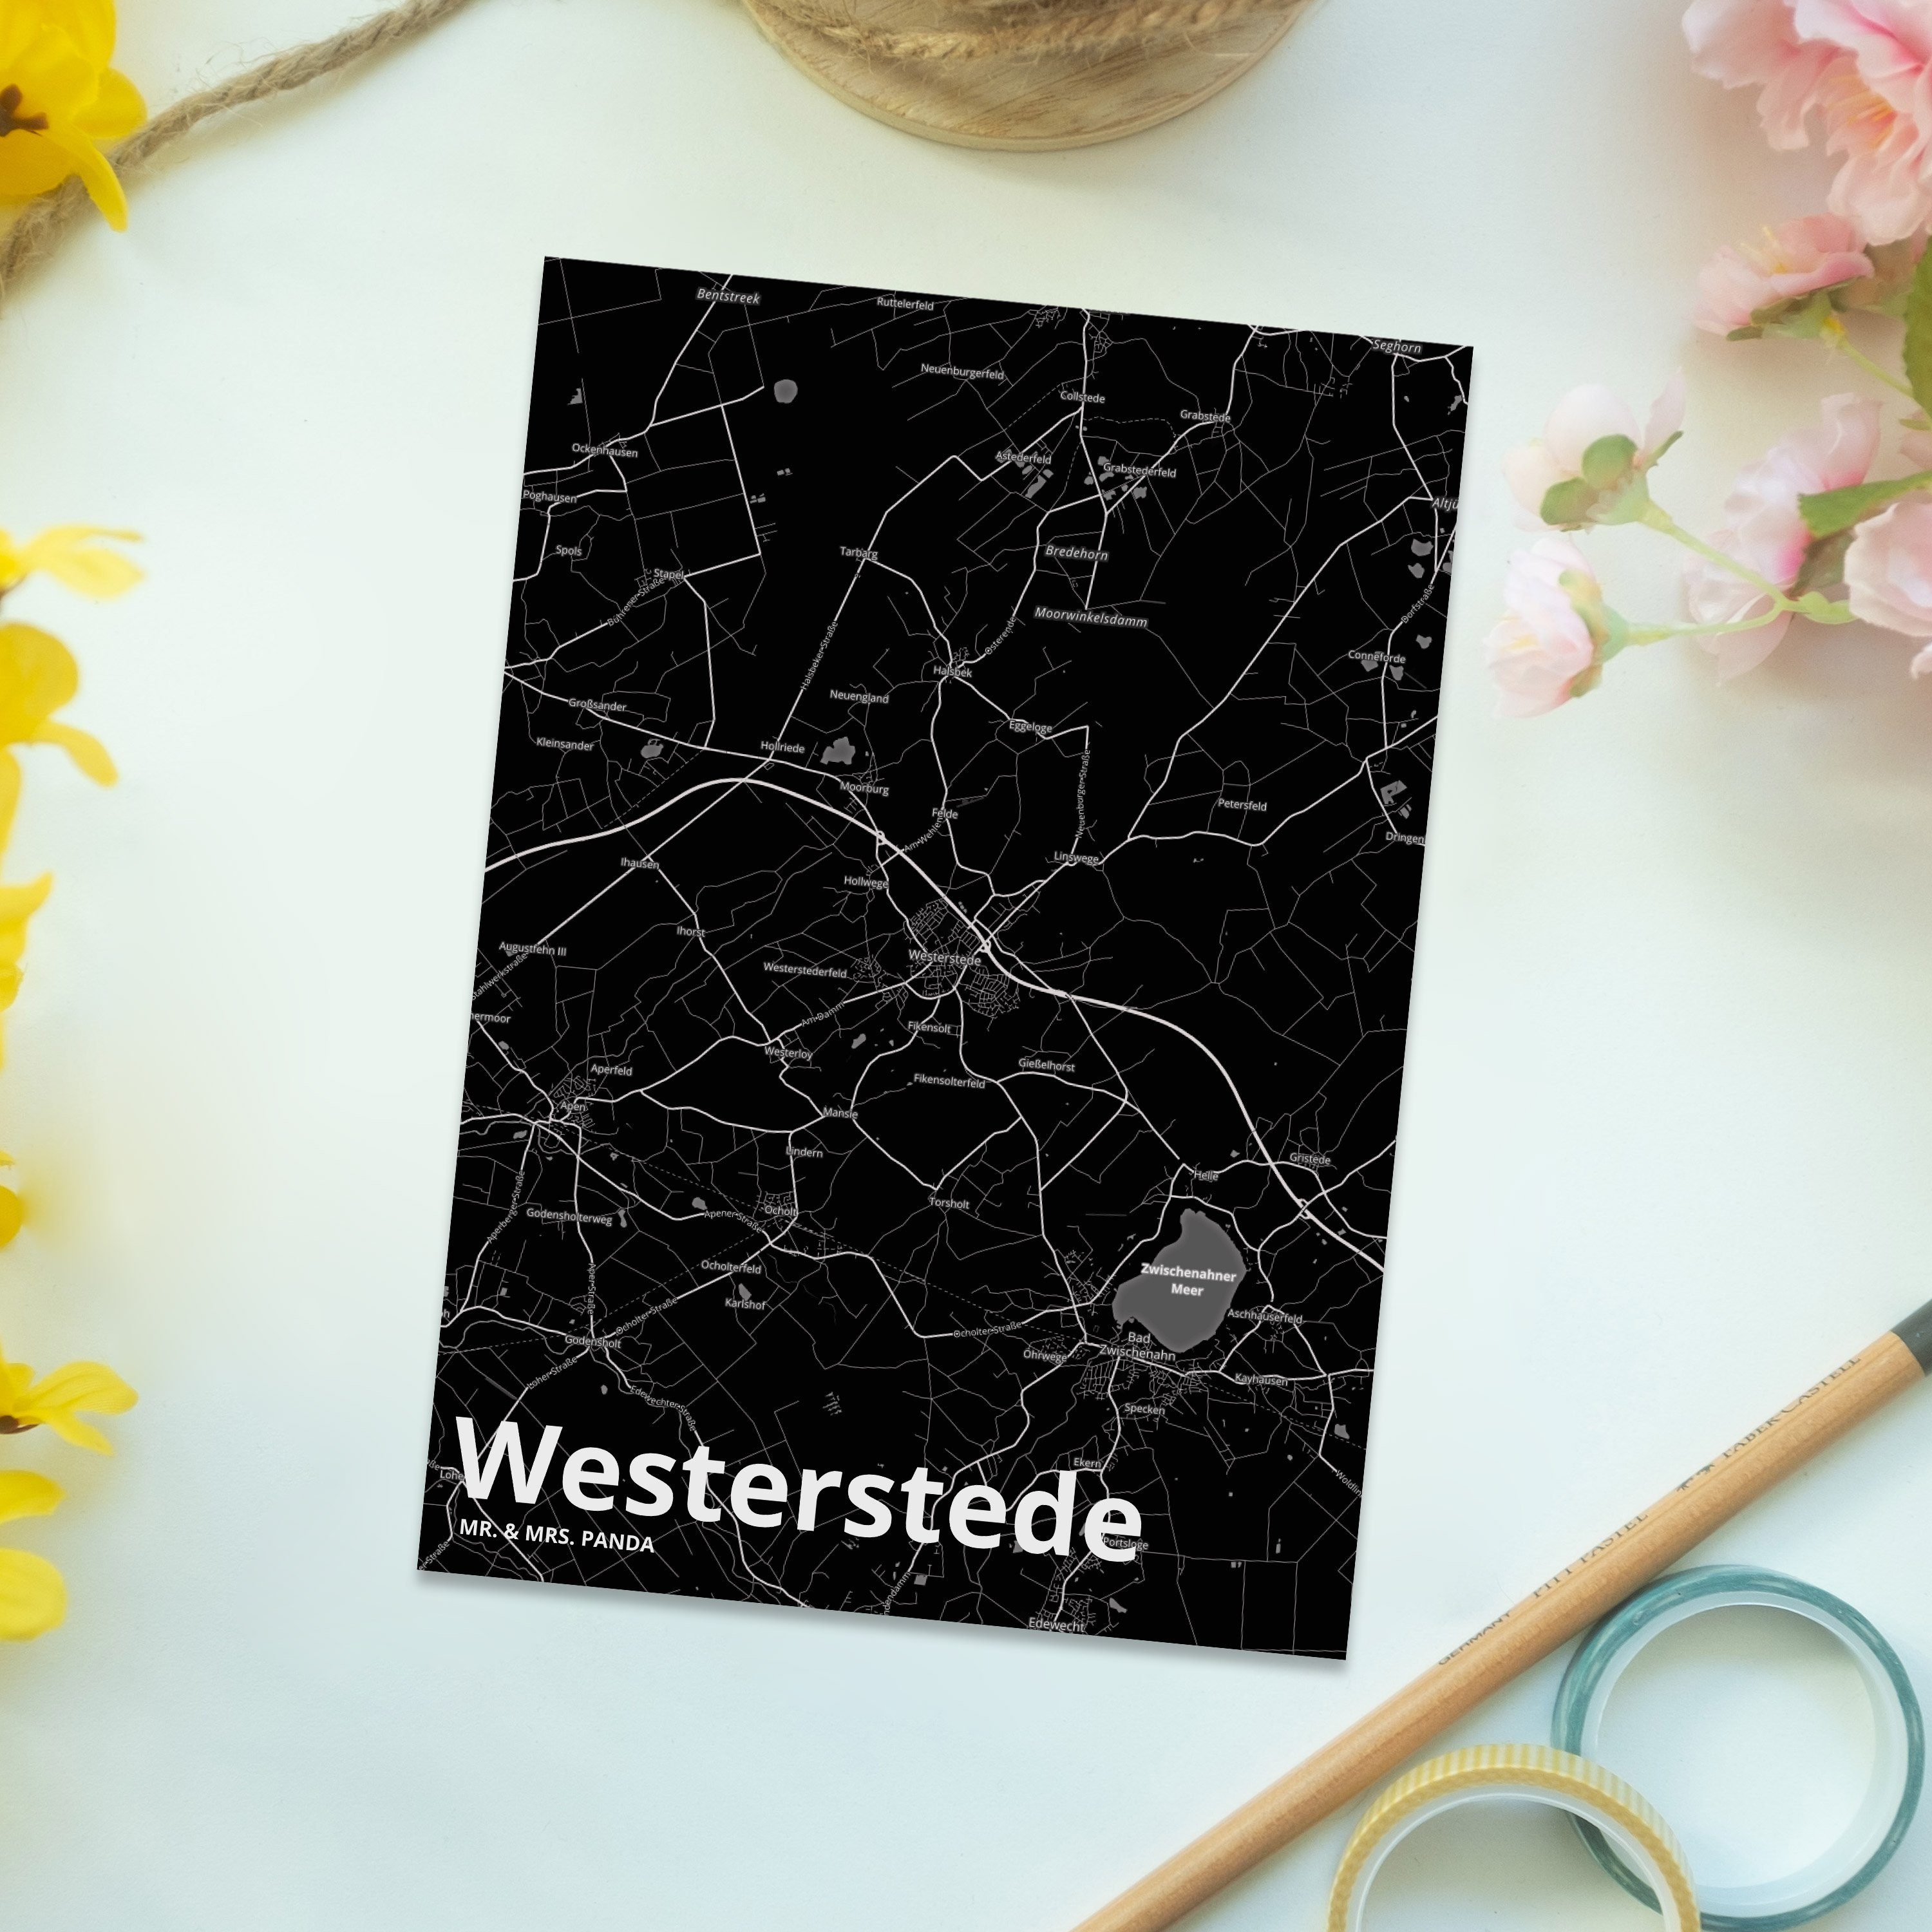 Mr. & Panda Geburtstagsk Westerstede Postkarte Städte, - Grußkarte, Karte, Mrs. Stadt, Geschenk